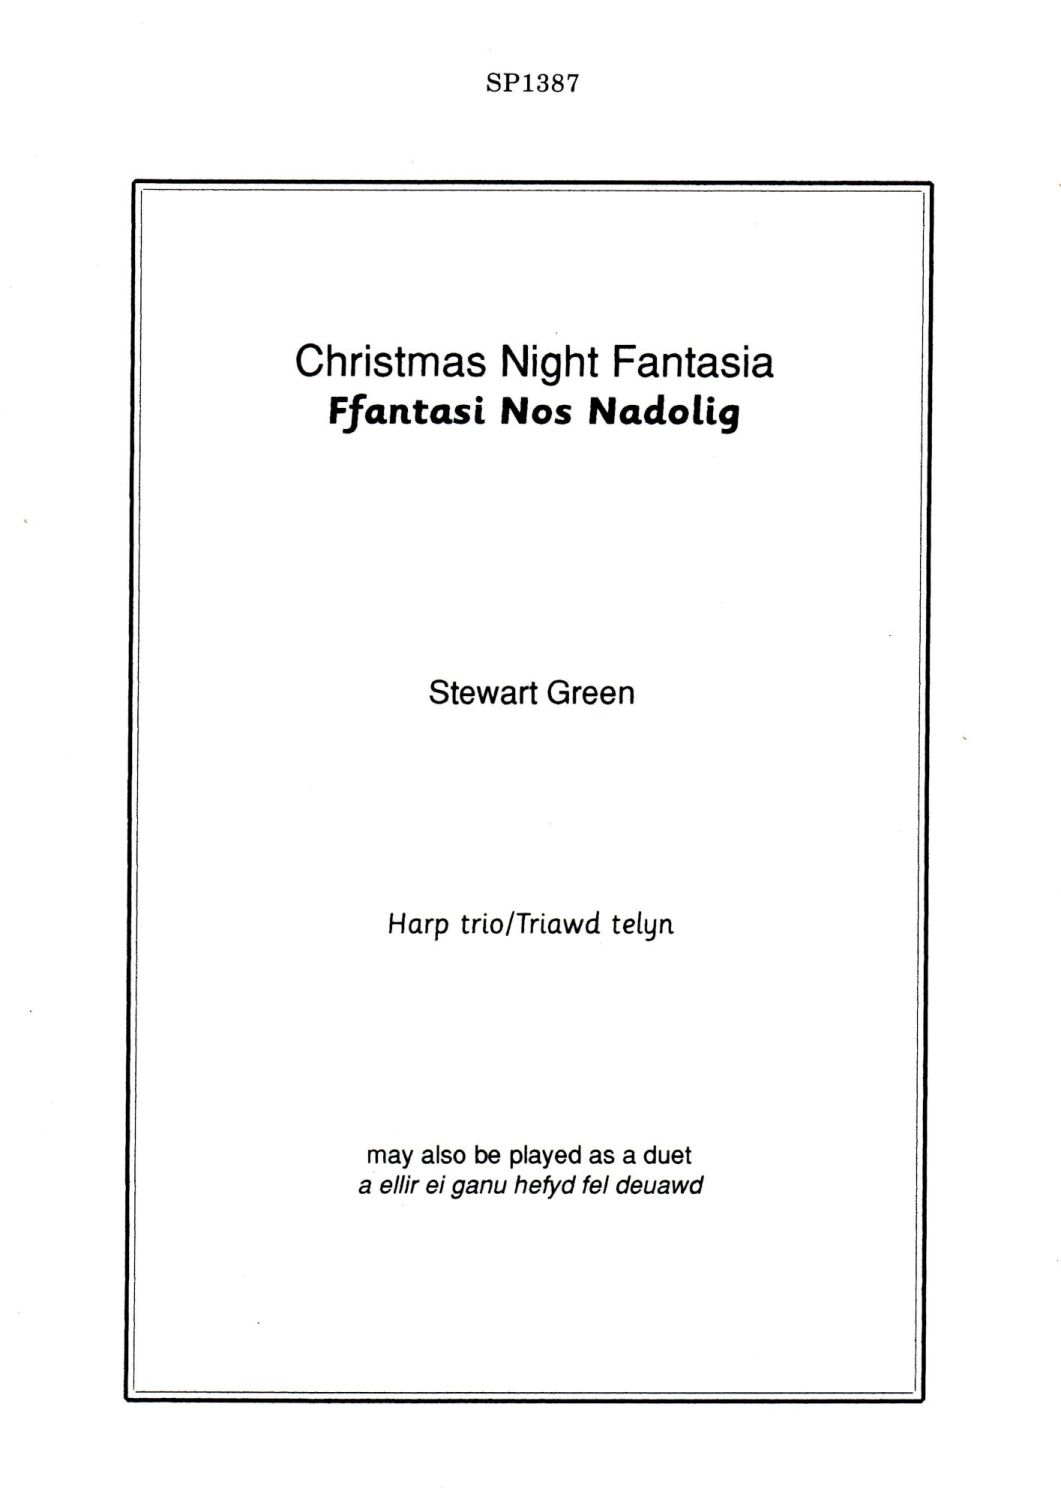 Christmas Night Fantasia (Ffantasi Nos Nadolig) - Stewart Green